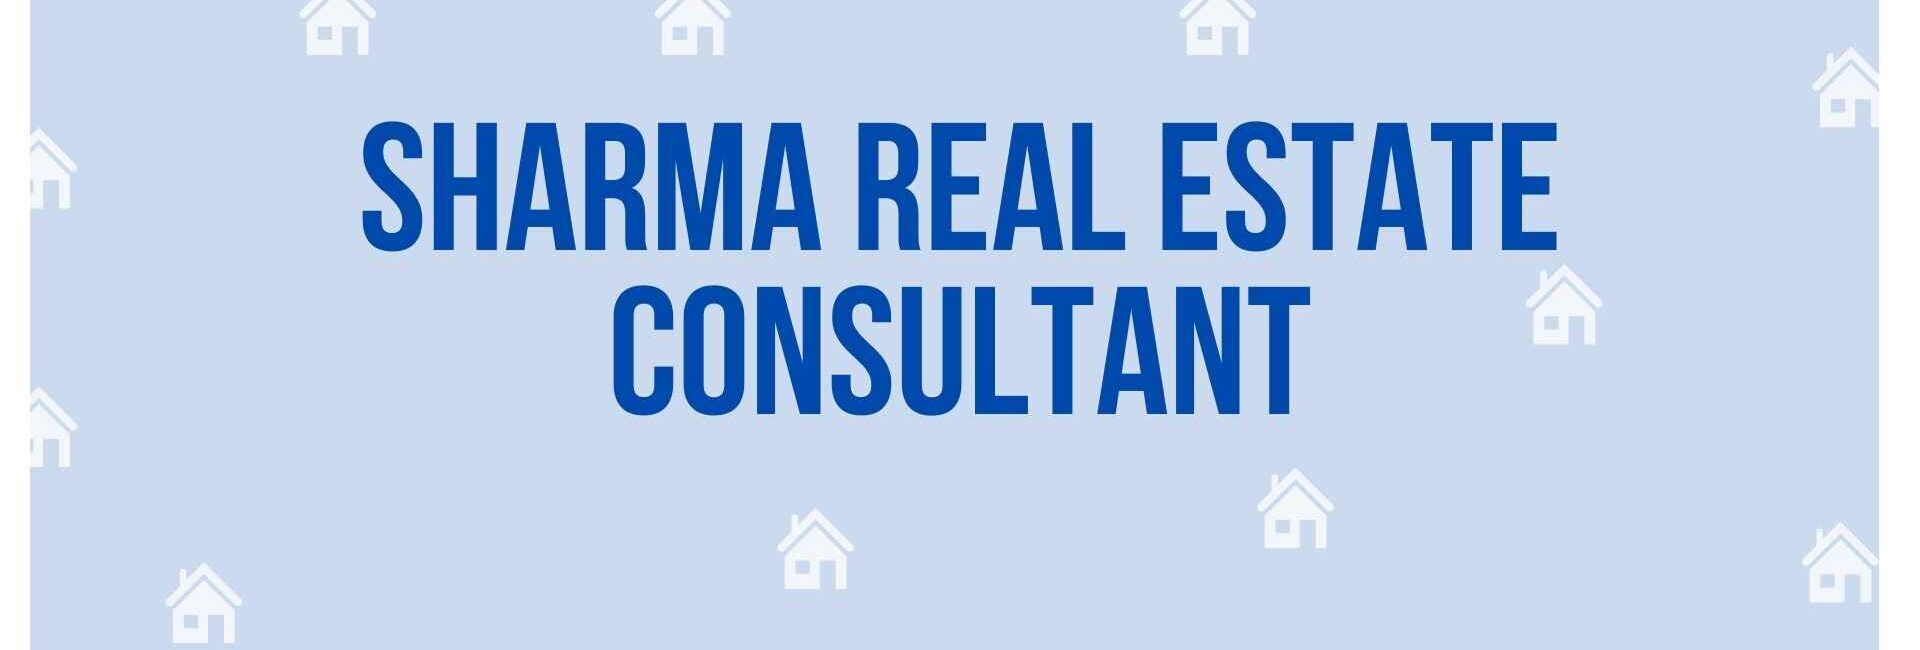 Sharma Real Estate Consultant - Property Dealer in Noida